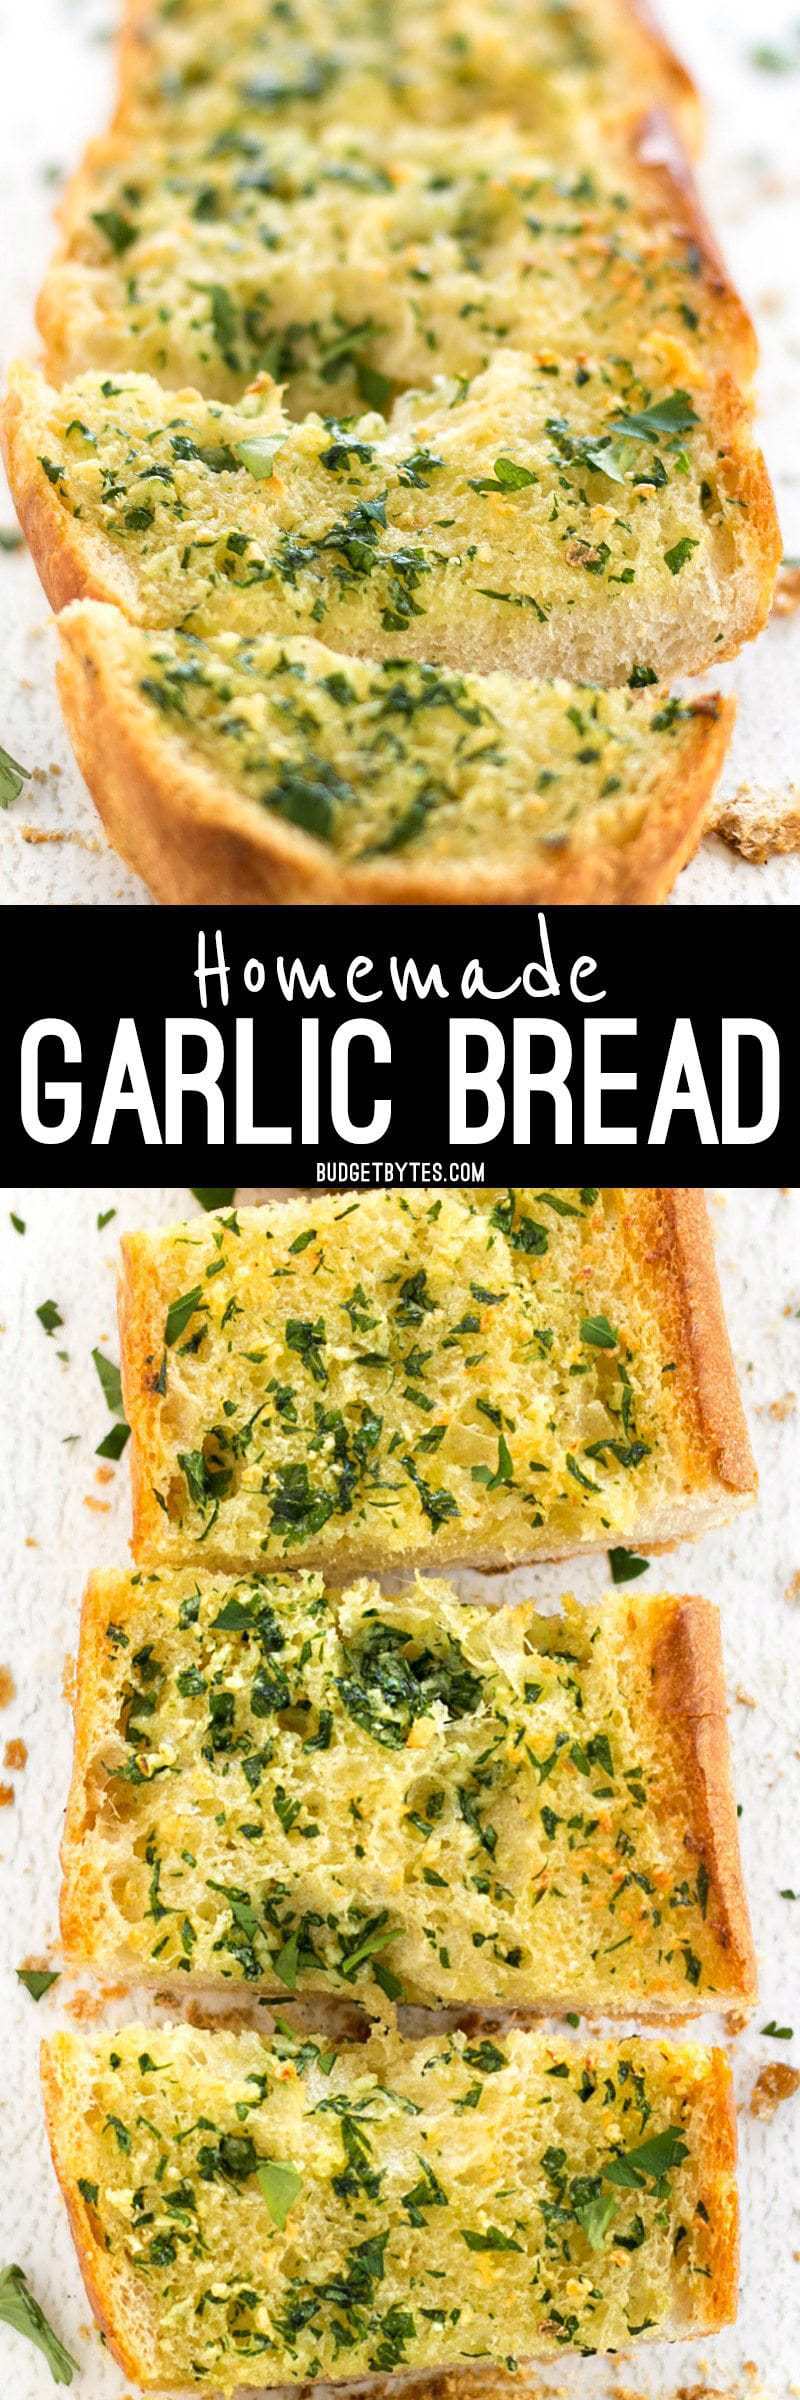 Homemade Garlic Bread - Budget Bytes